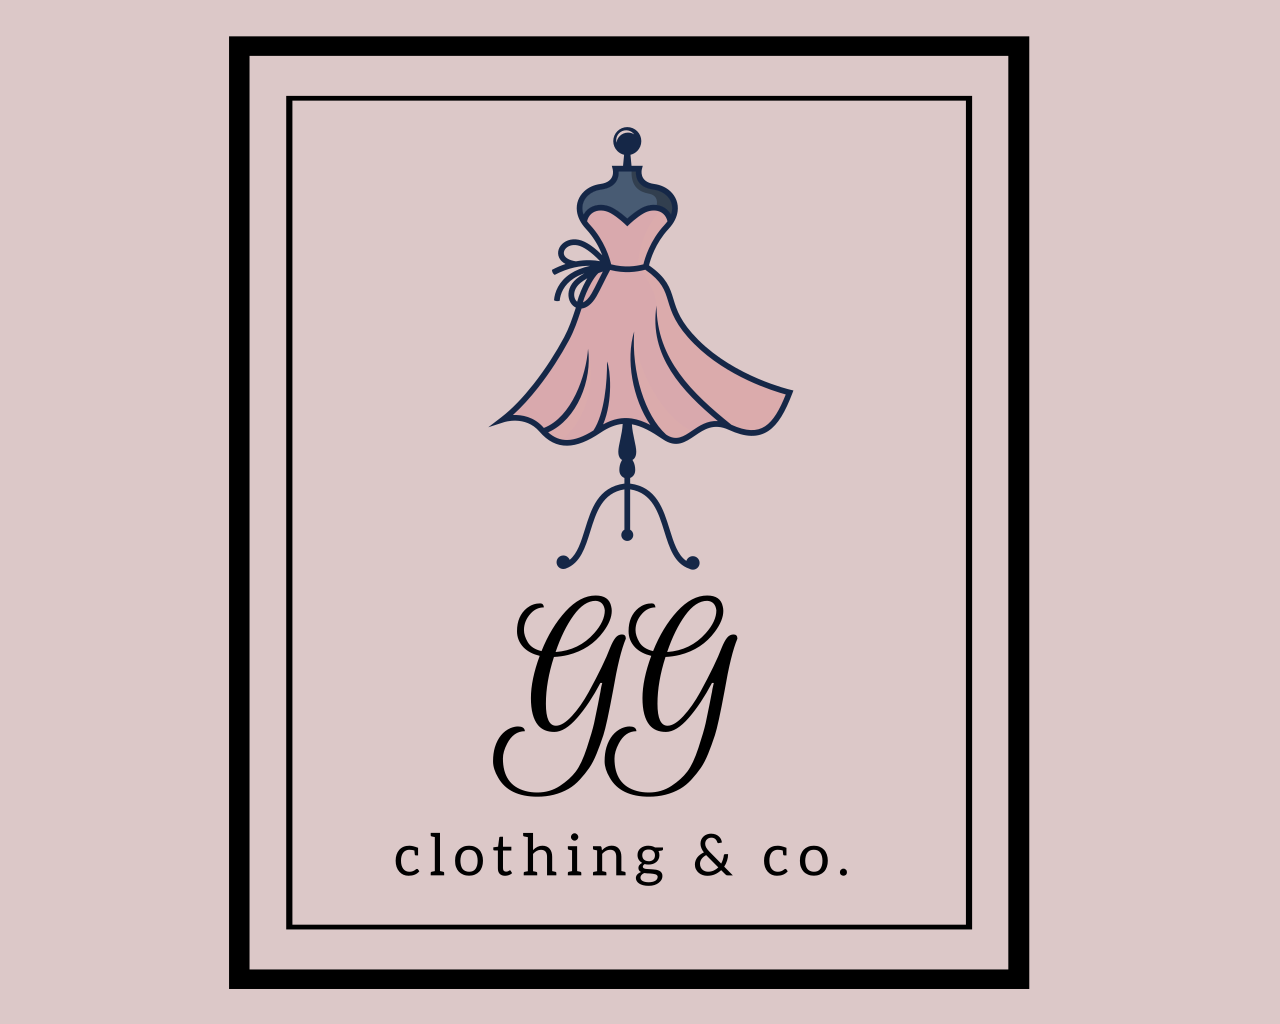 GG clothing & co.'s logo